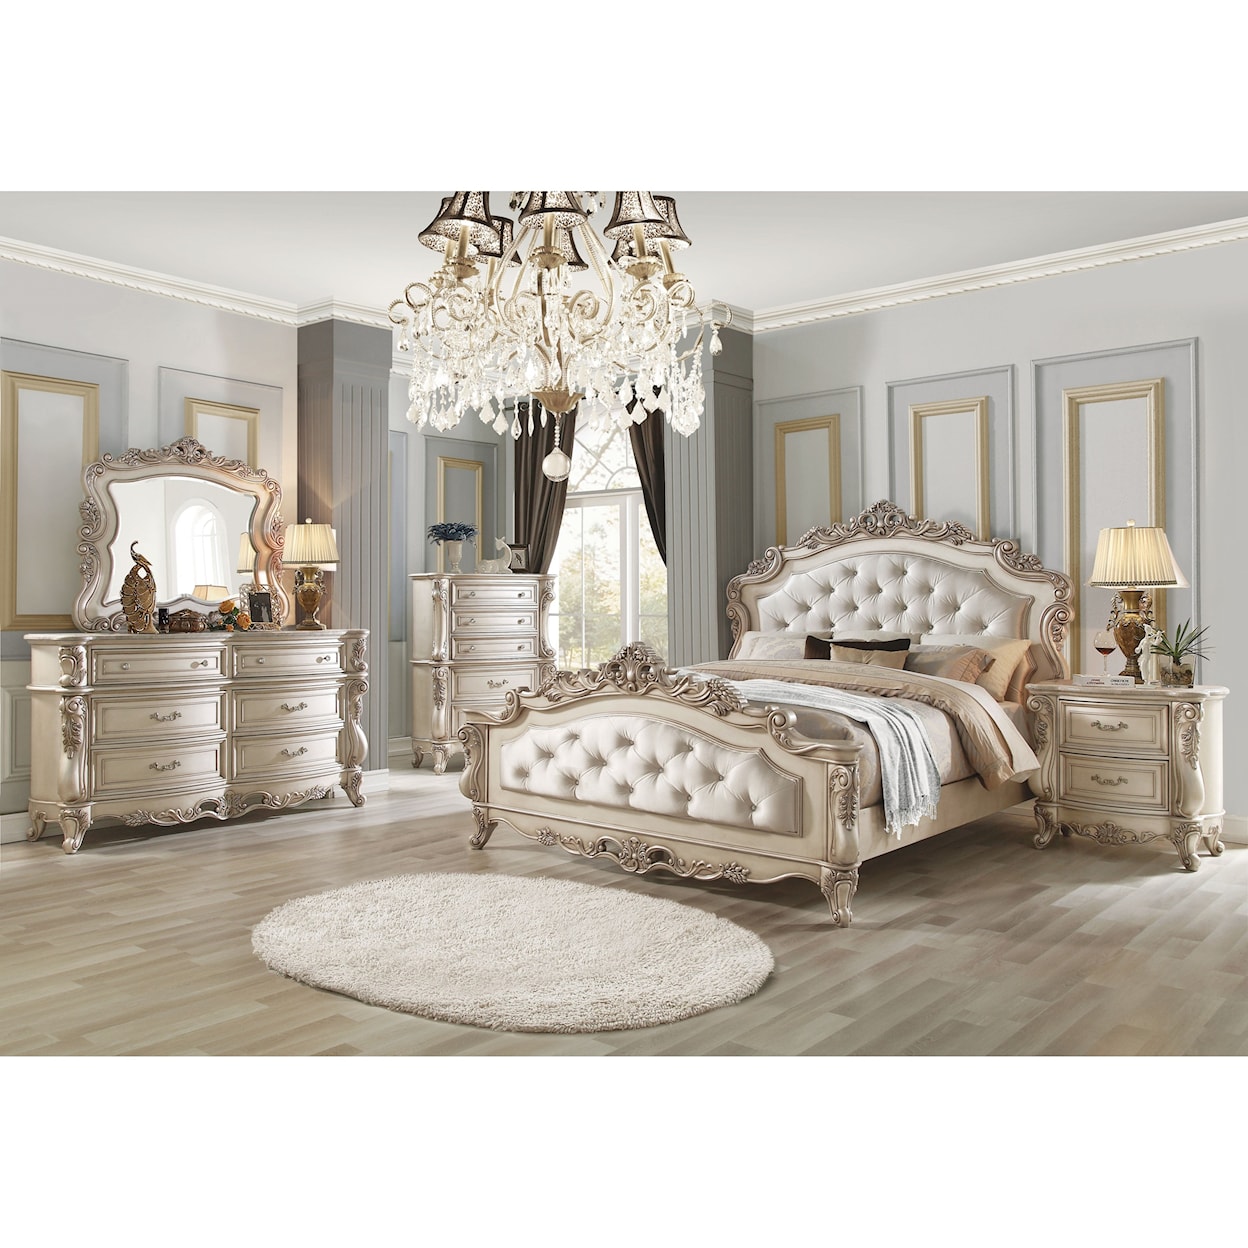 Acme Furniture Gorsedd California King Bedroom Group